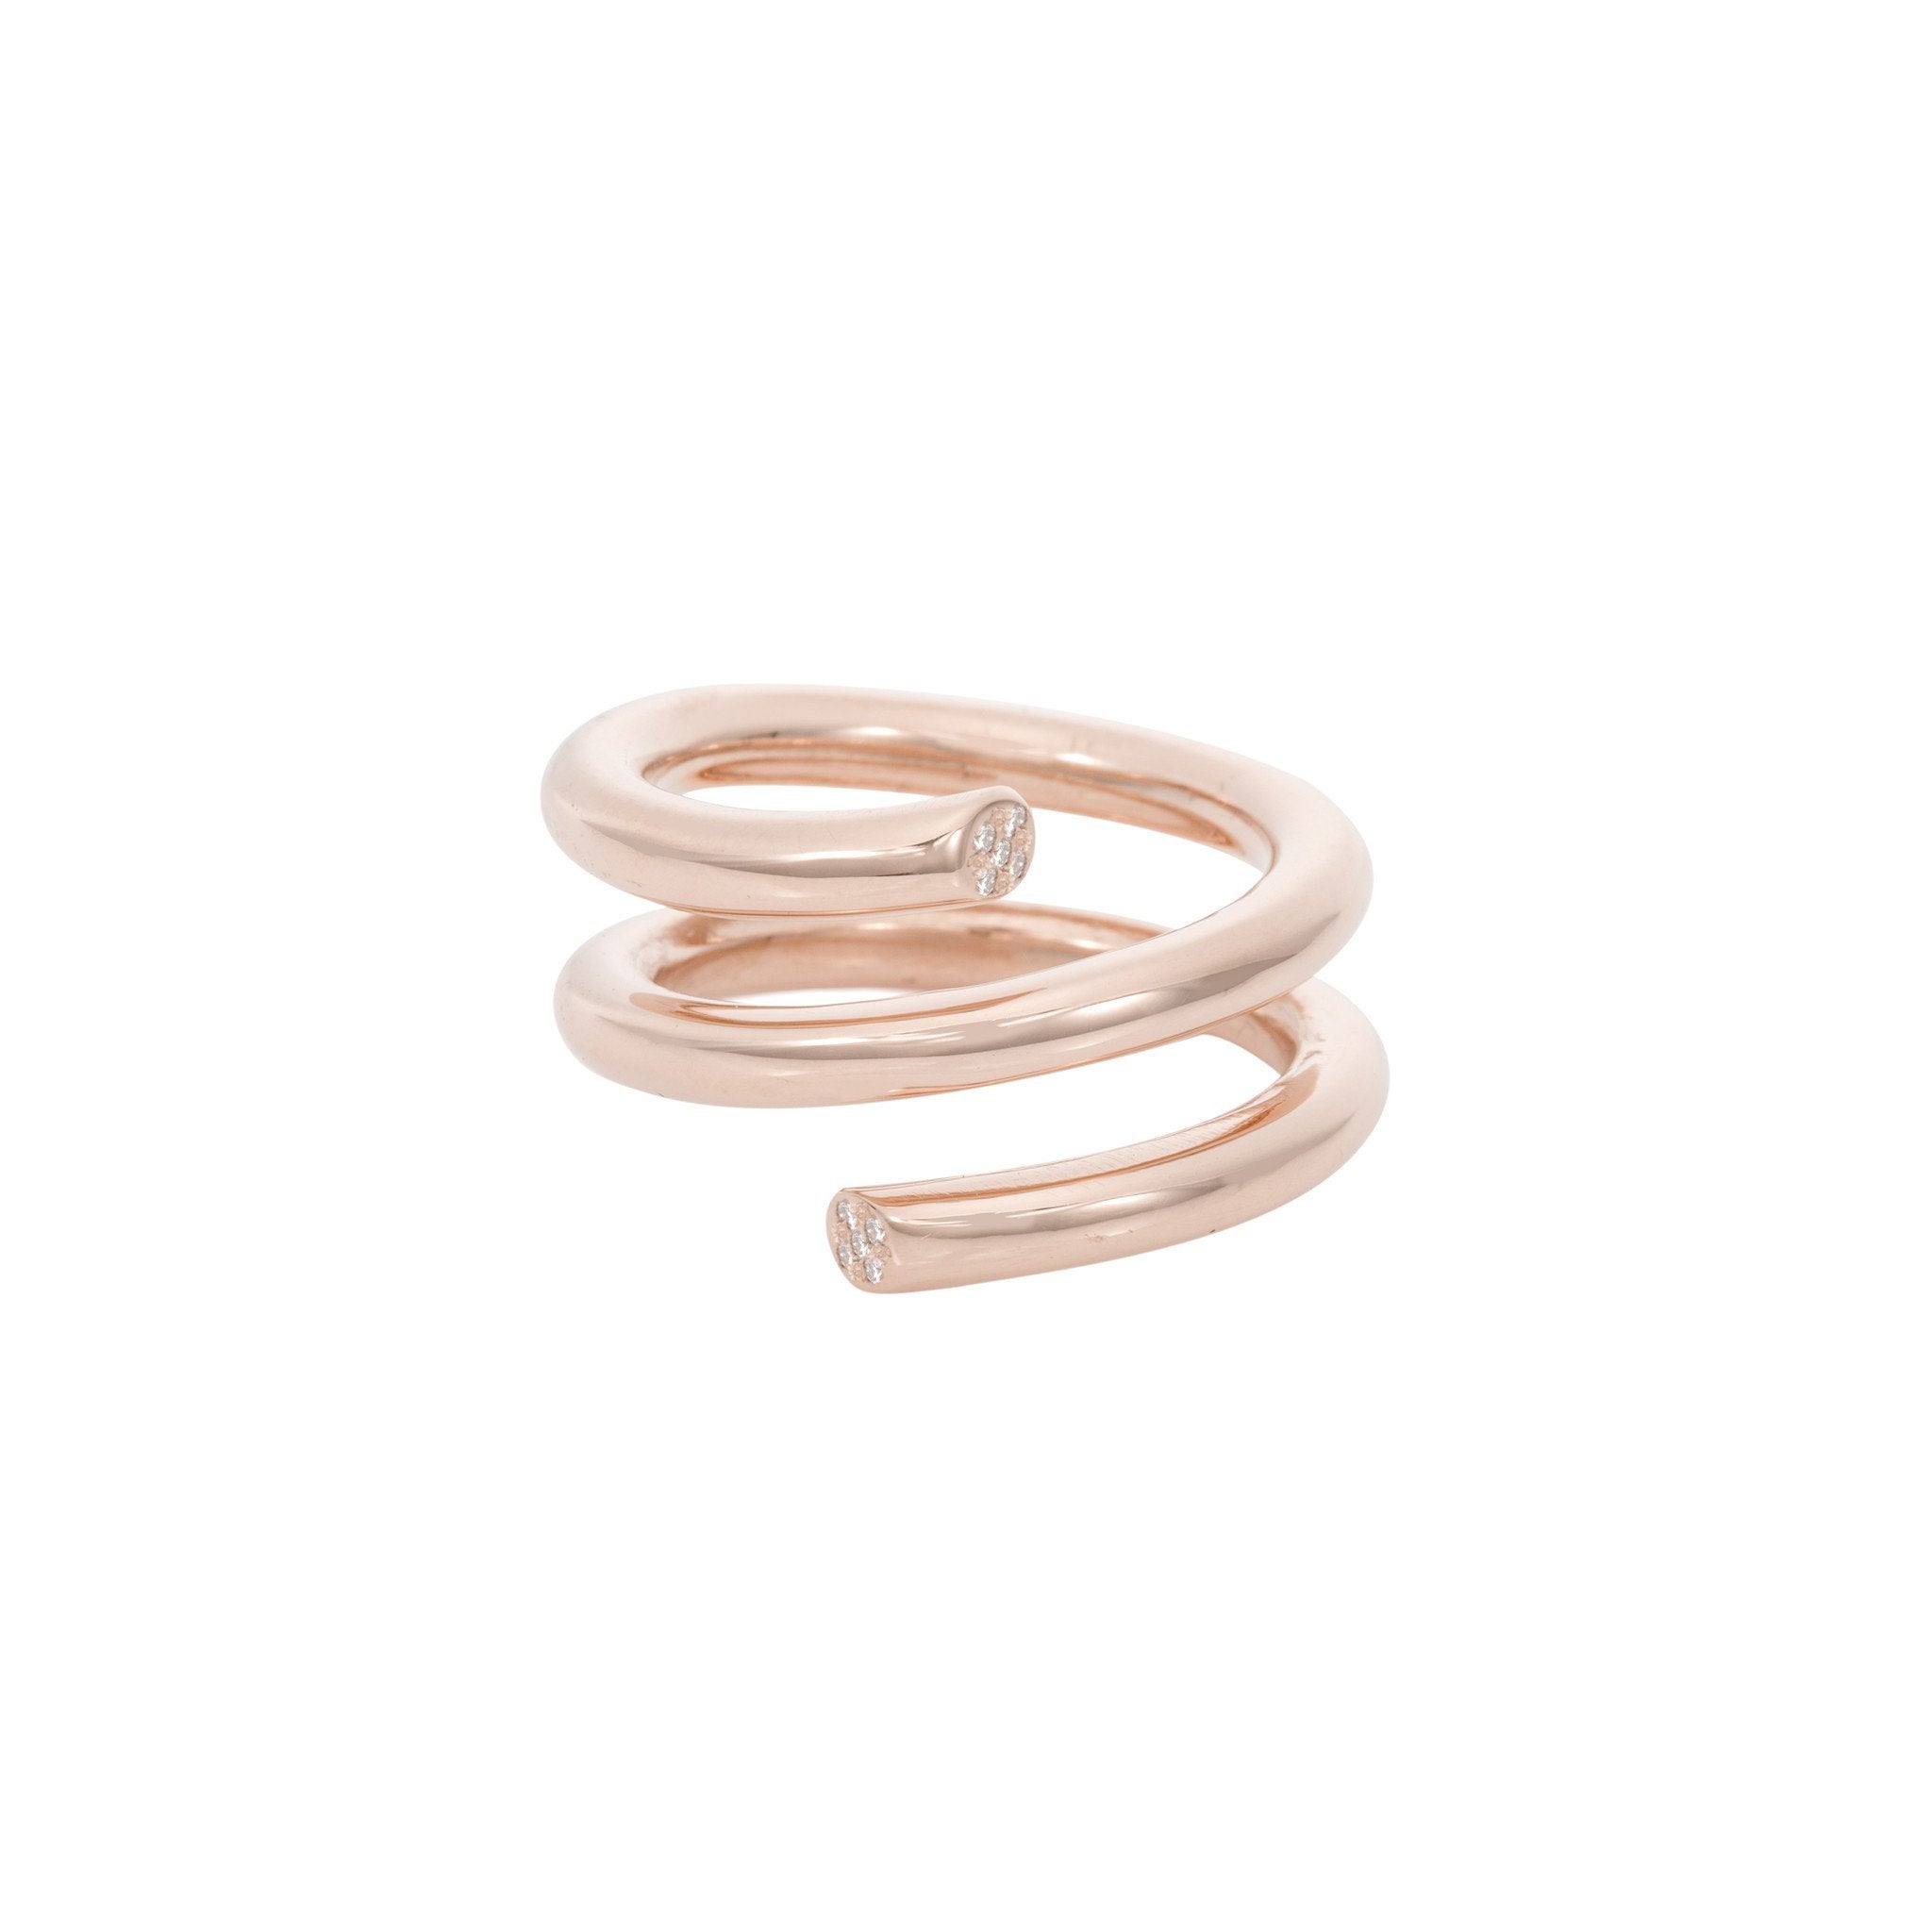 Spring Ring | Ariel Gordon Jewelry